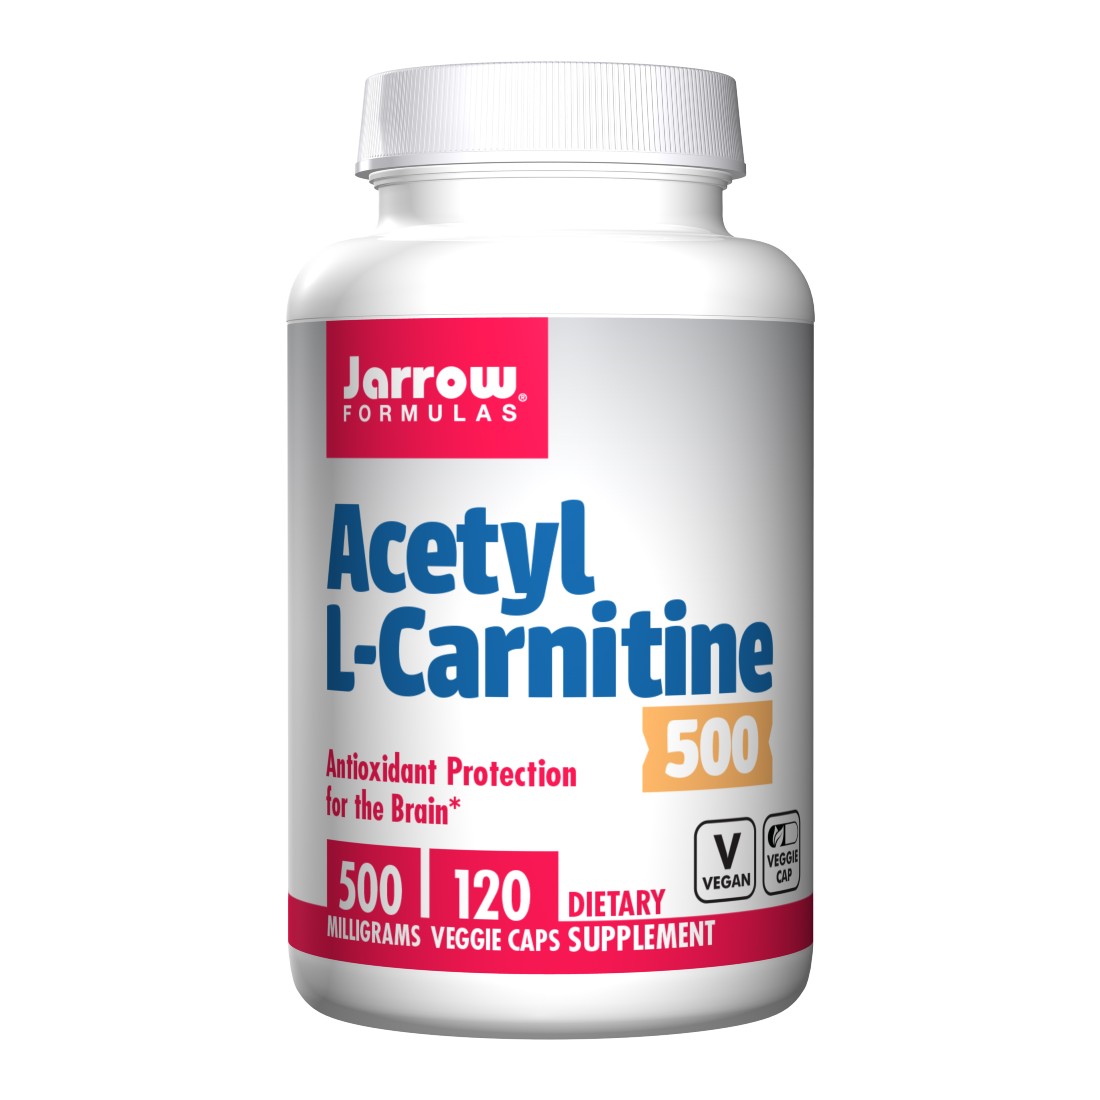 Acetyl L-Carnitine 120 - Jarrow Formulas